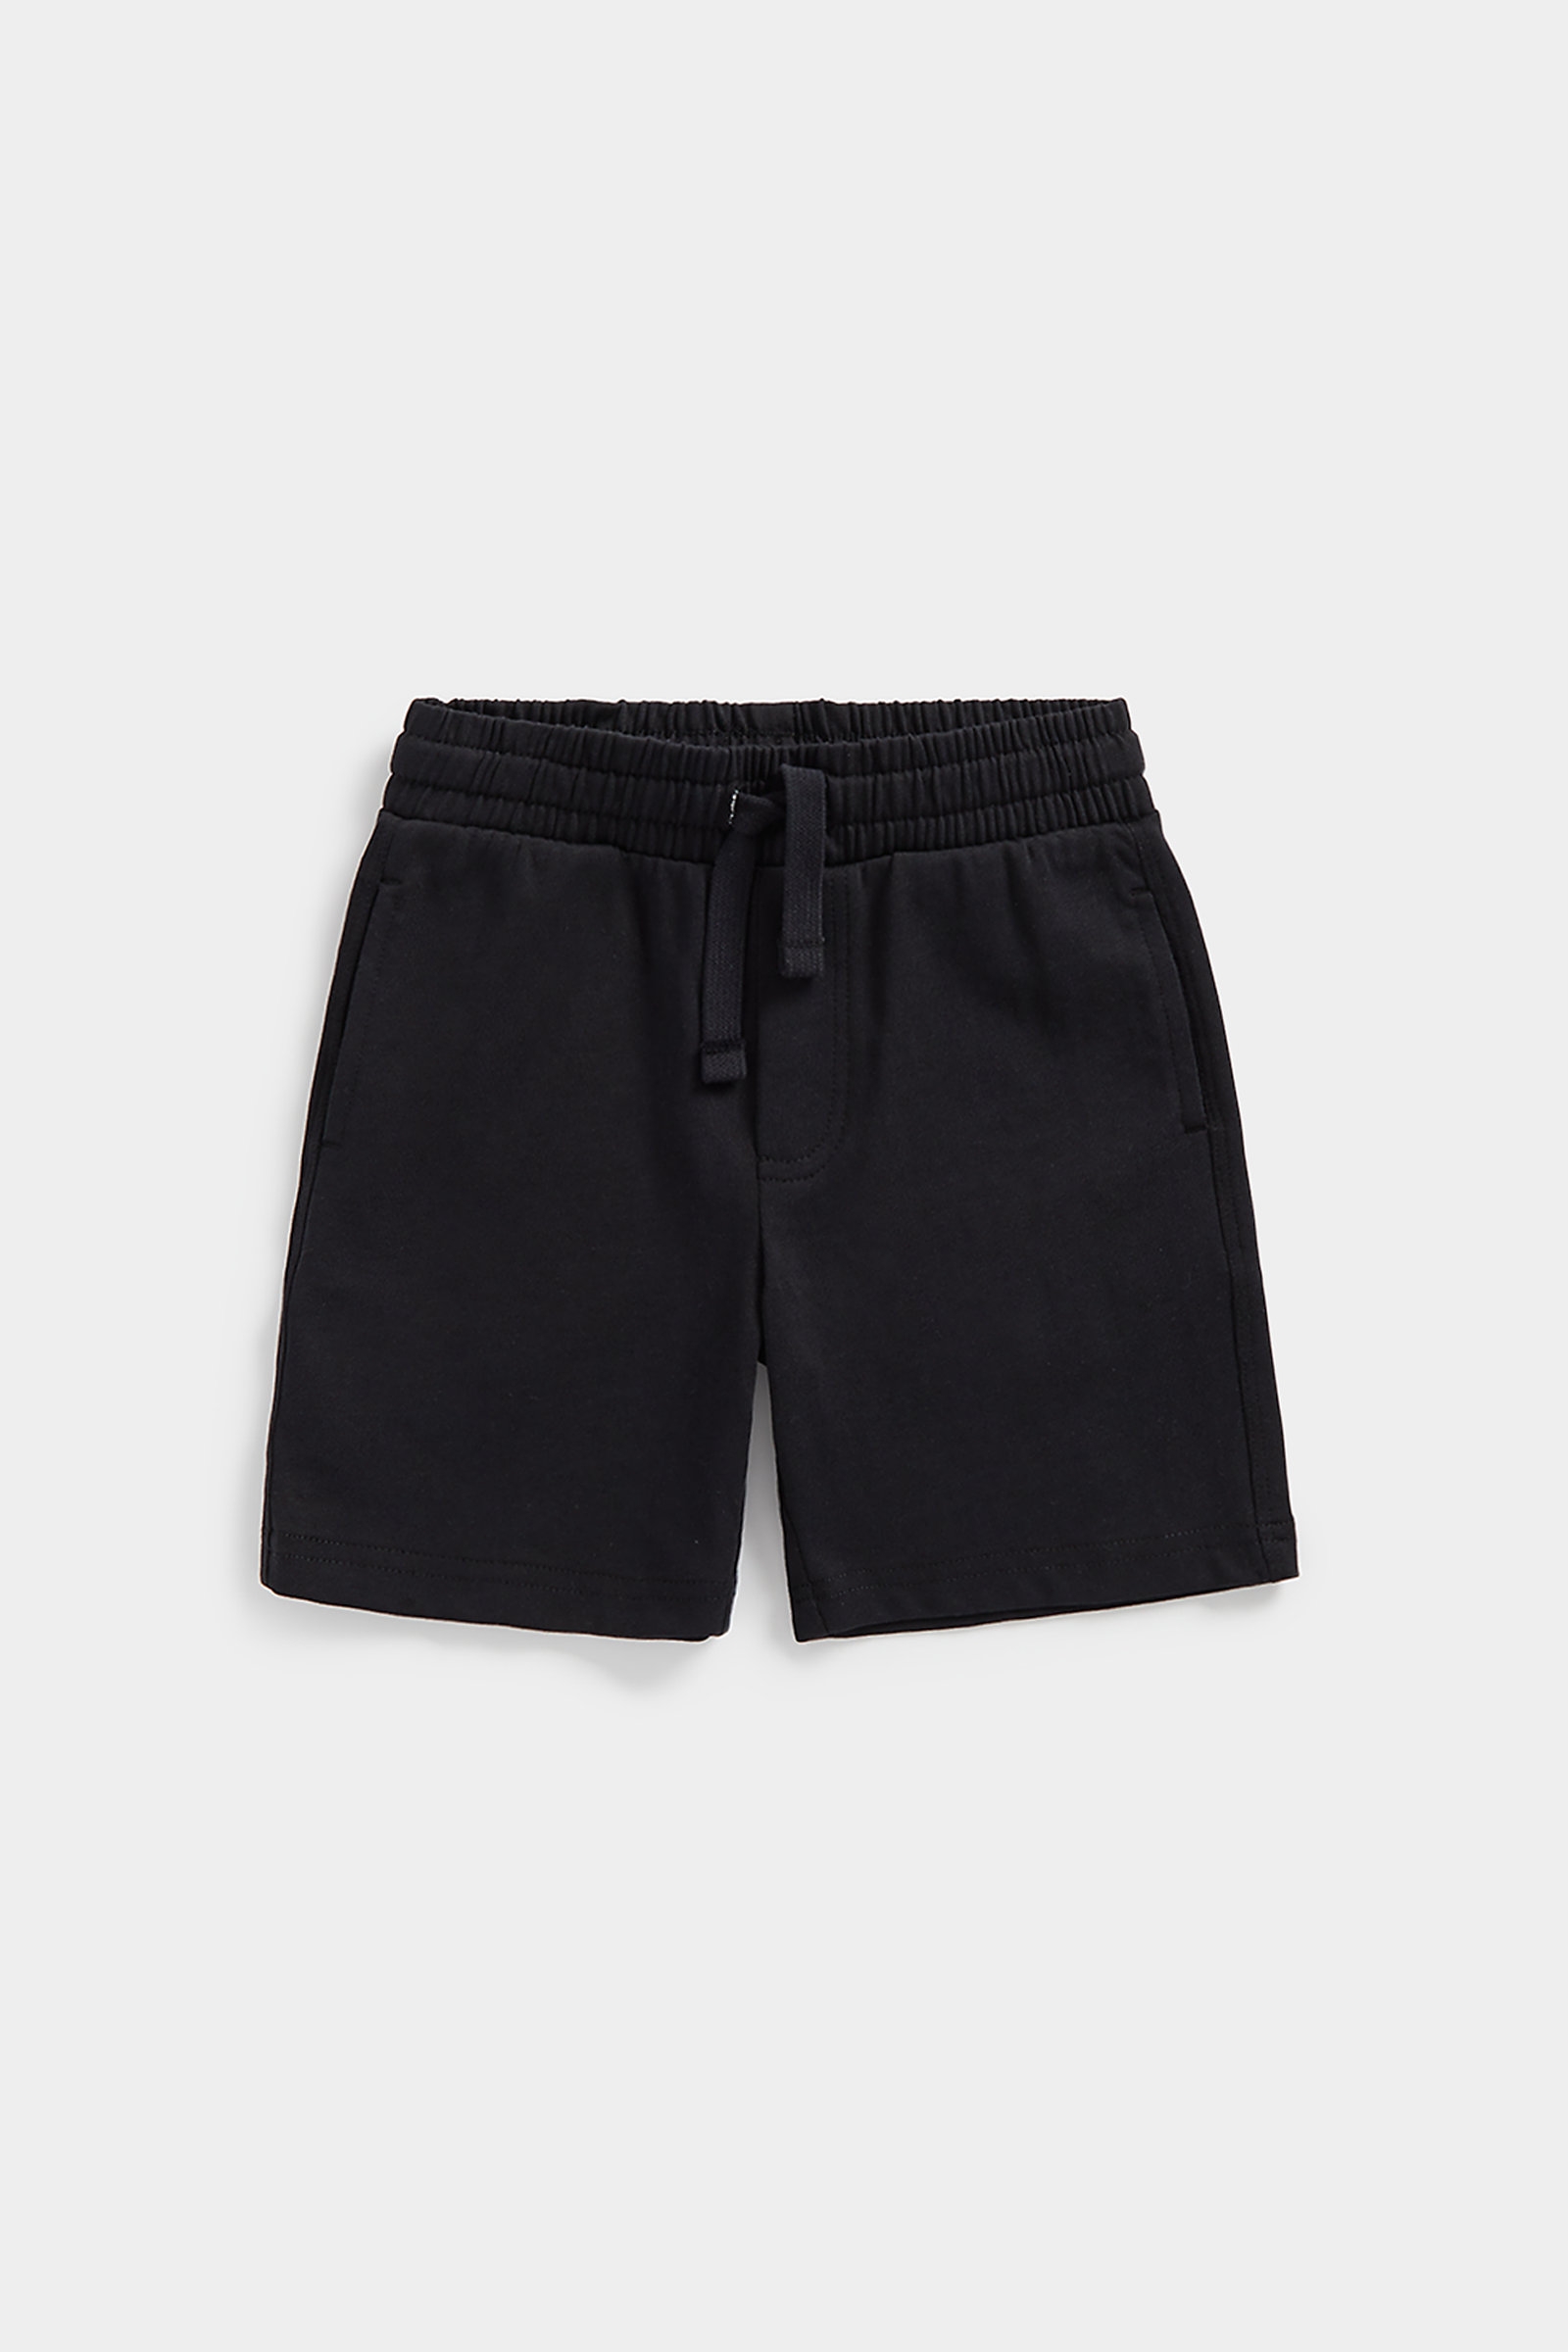 Boys Short Black Jersey Shorts -Black